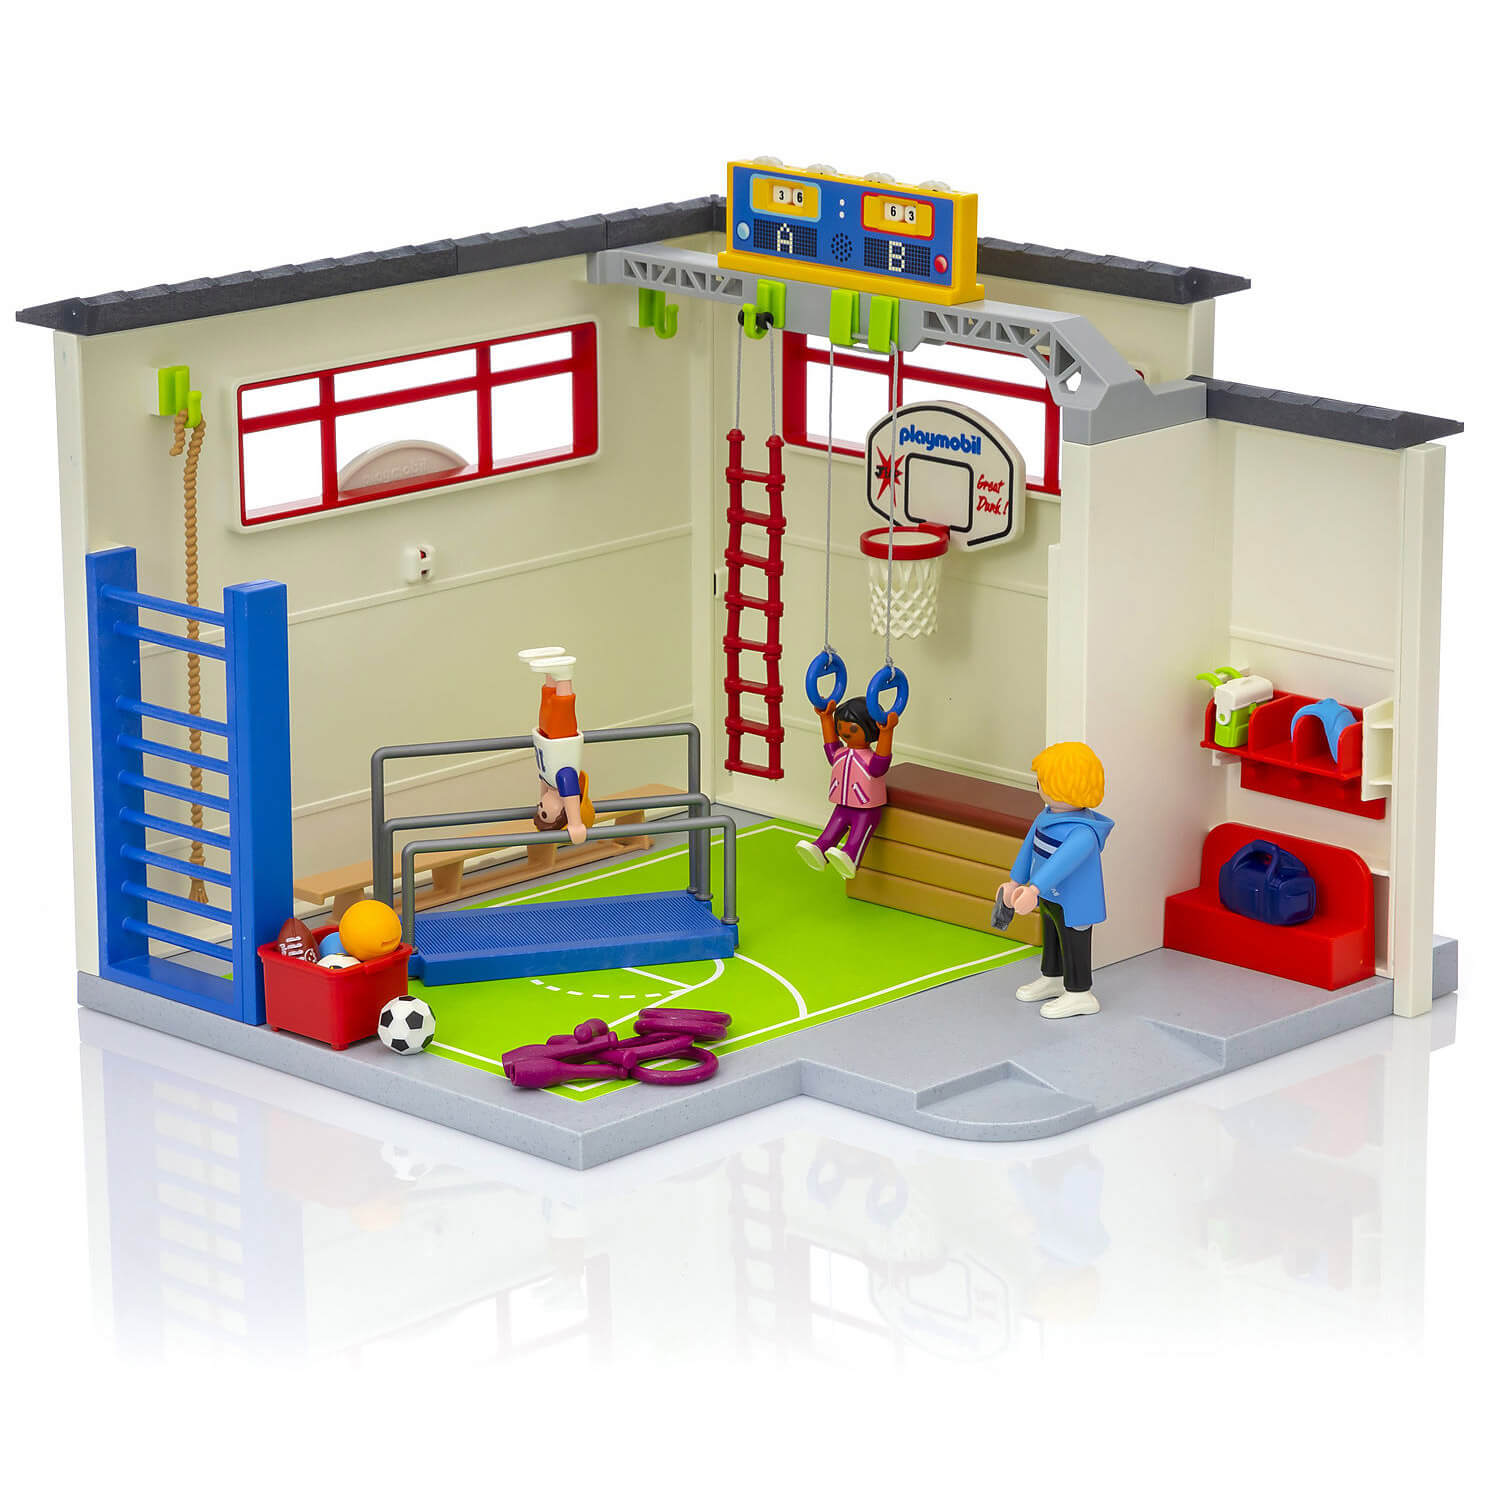 9454 - Salle de sports Playmobil City Life Playmobil : King Jouet,  Playmobil Playmobil - Jeux d'imitation & Mondes imaginaires